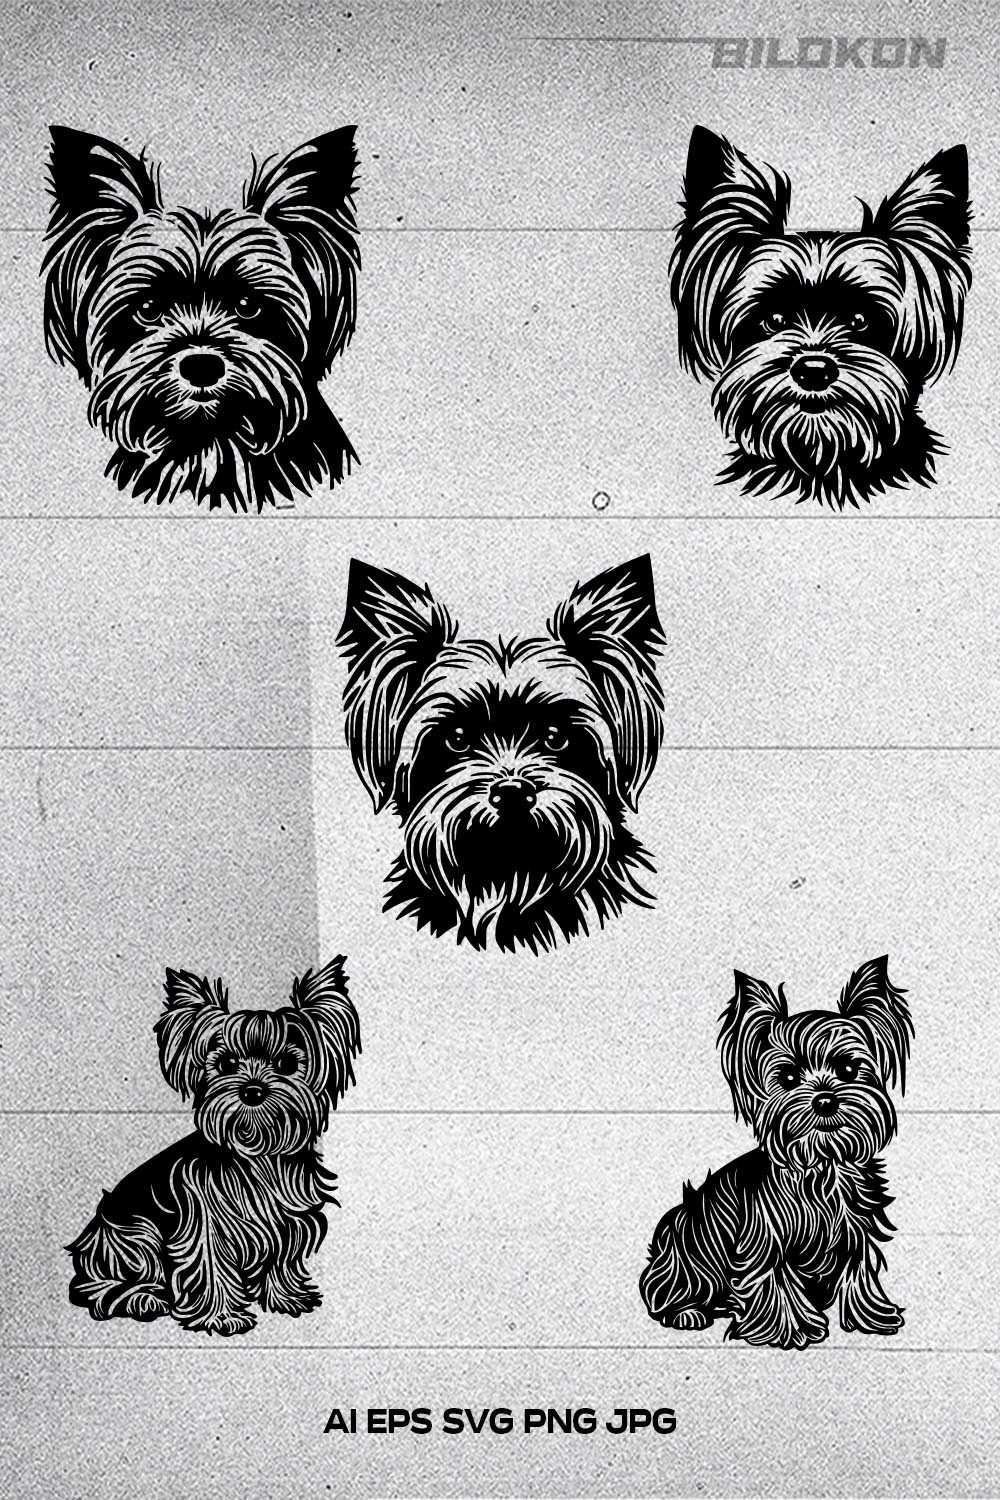 Yorkshire Terrier dog vector illustration pinterest preview image.